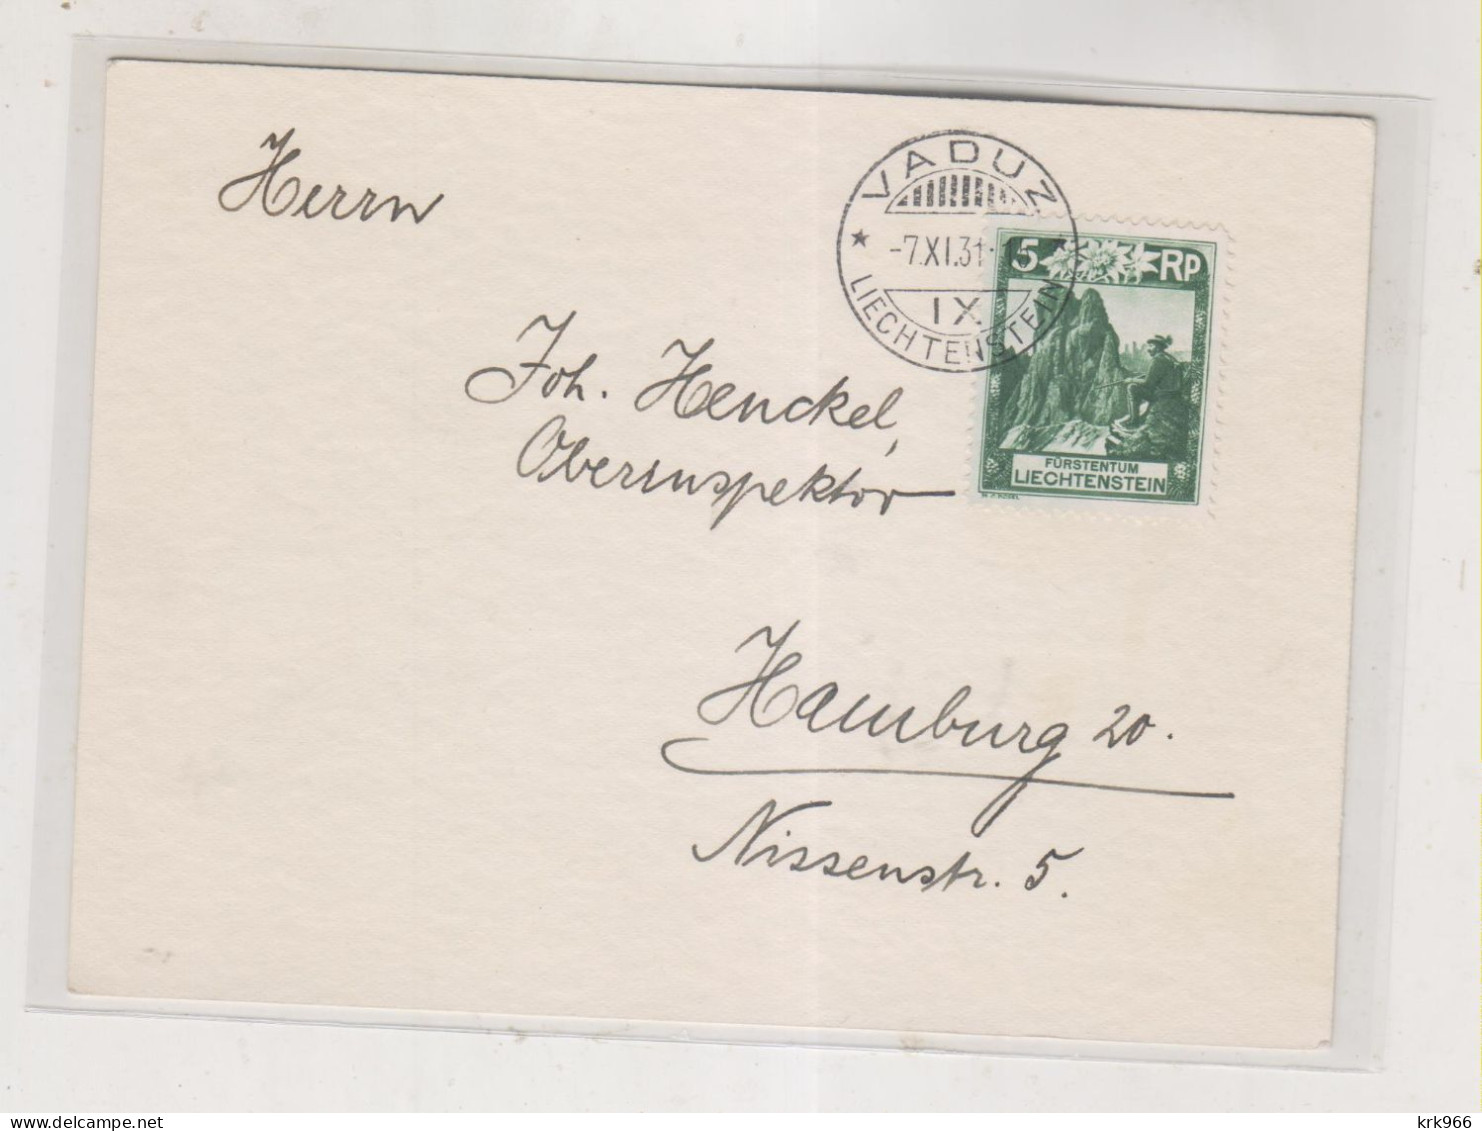 LIECHTENSTEIN, VADUZ 1931 Nice Postcard - Covers & Documents